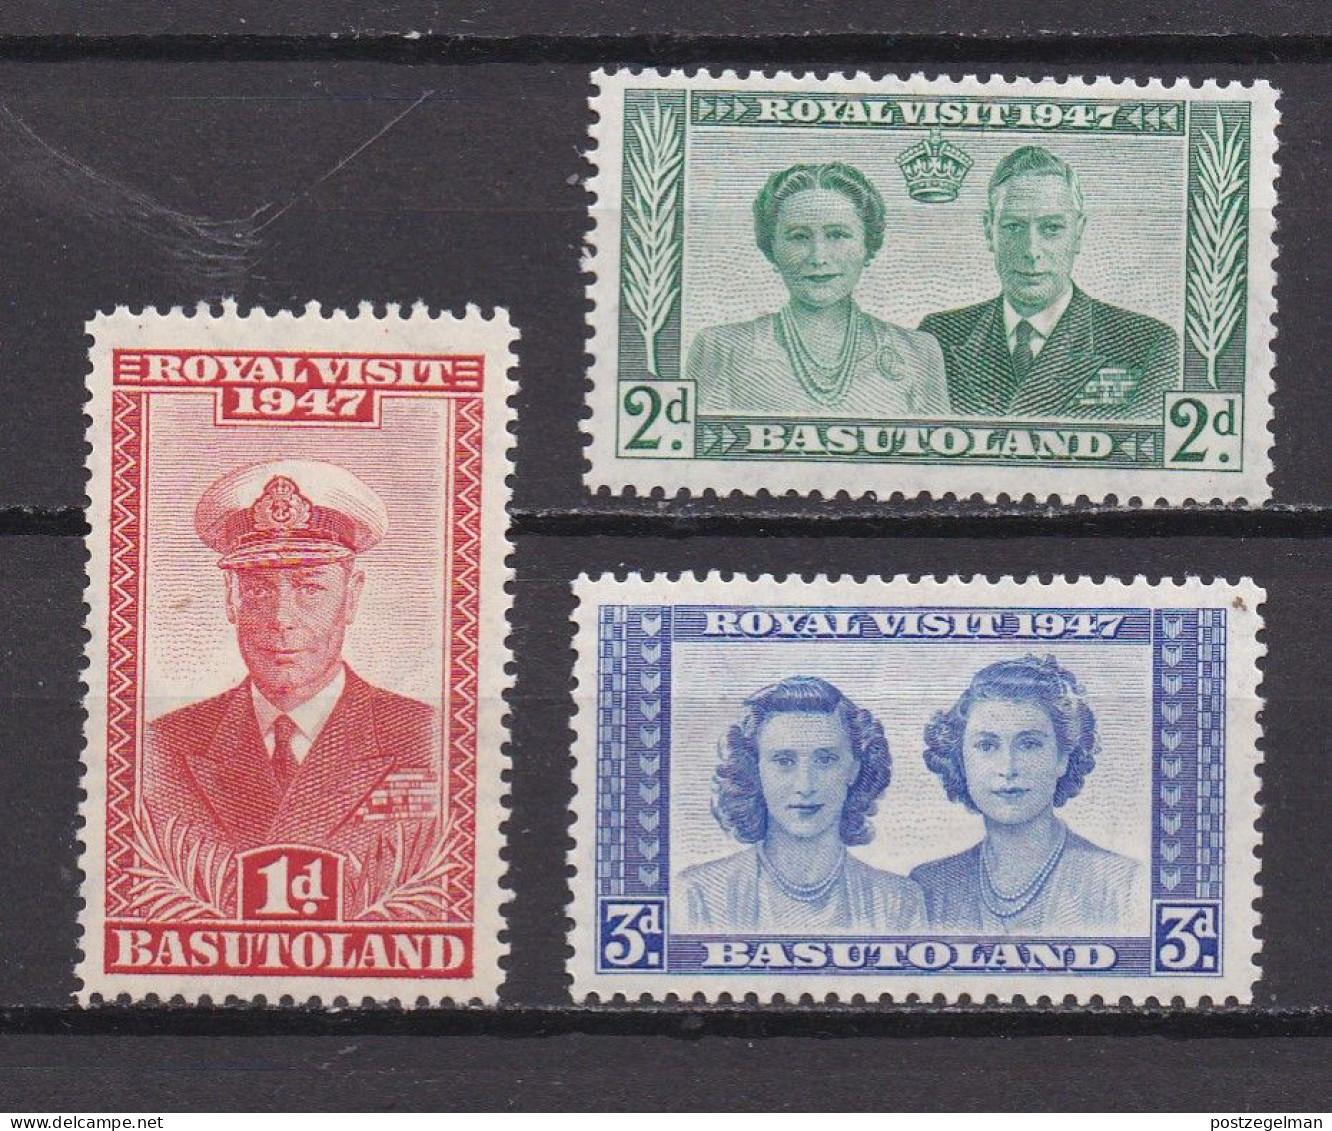 BASUTOLAND 1947 Mint Hinged Stamp(s) Royal Visit 35=38 (3 Values Only, ( Not A Complete Serie) - 1933-1964 Kolonie Van De Kroon